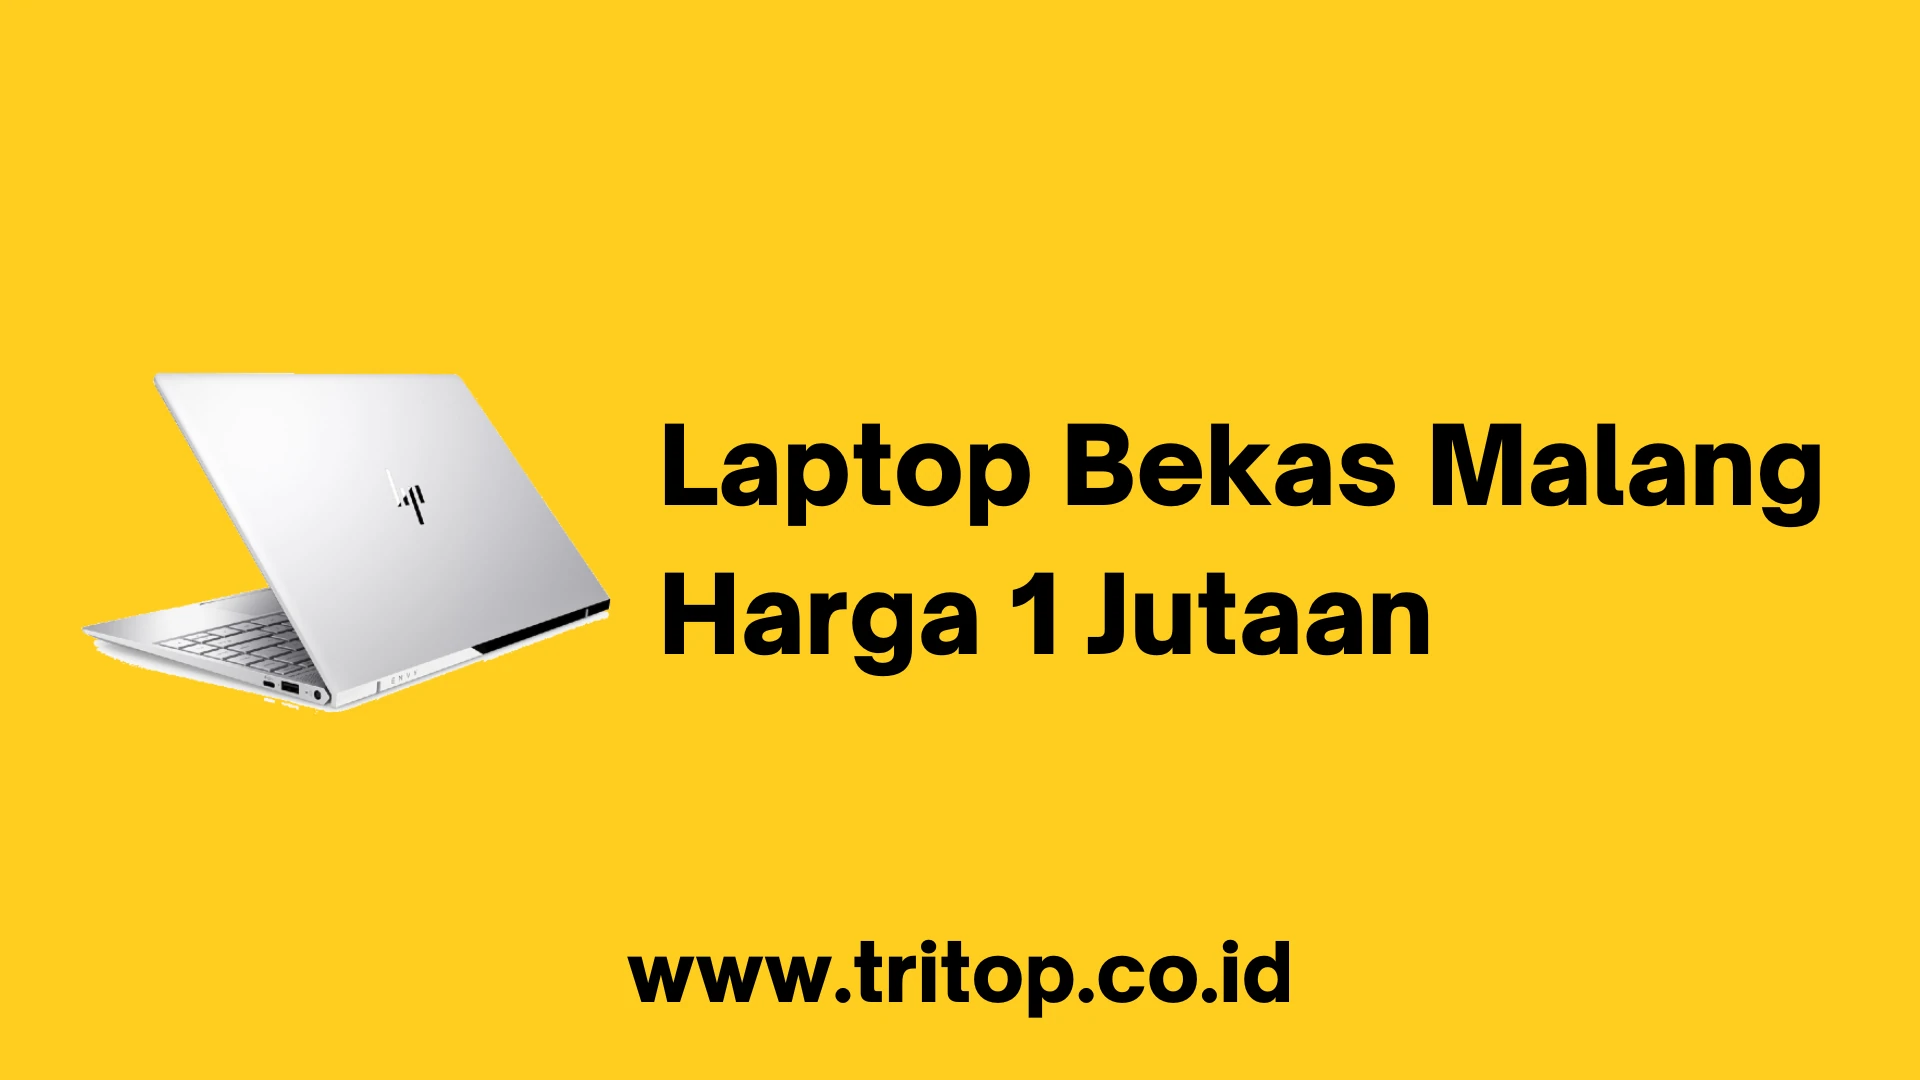 Laptop Bekas Malang Harga 1 Jutaan